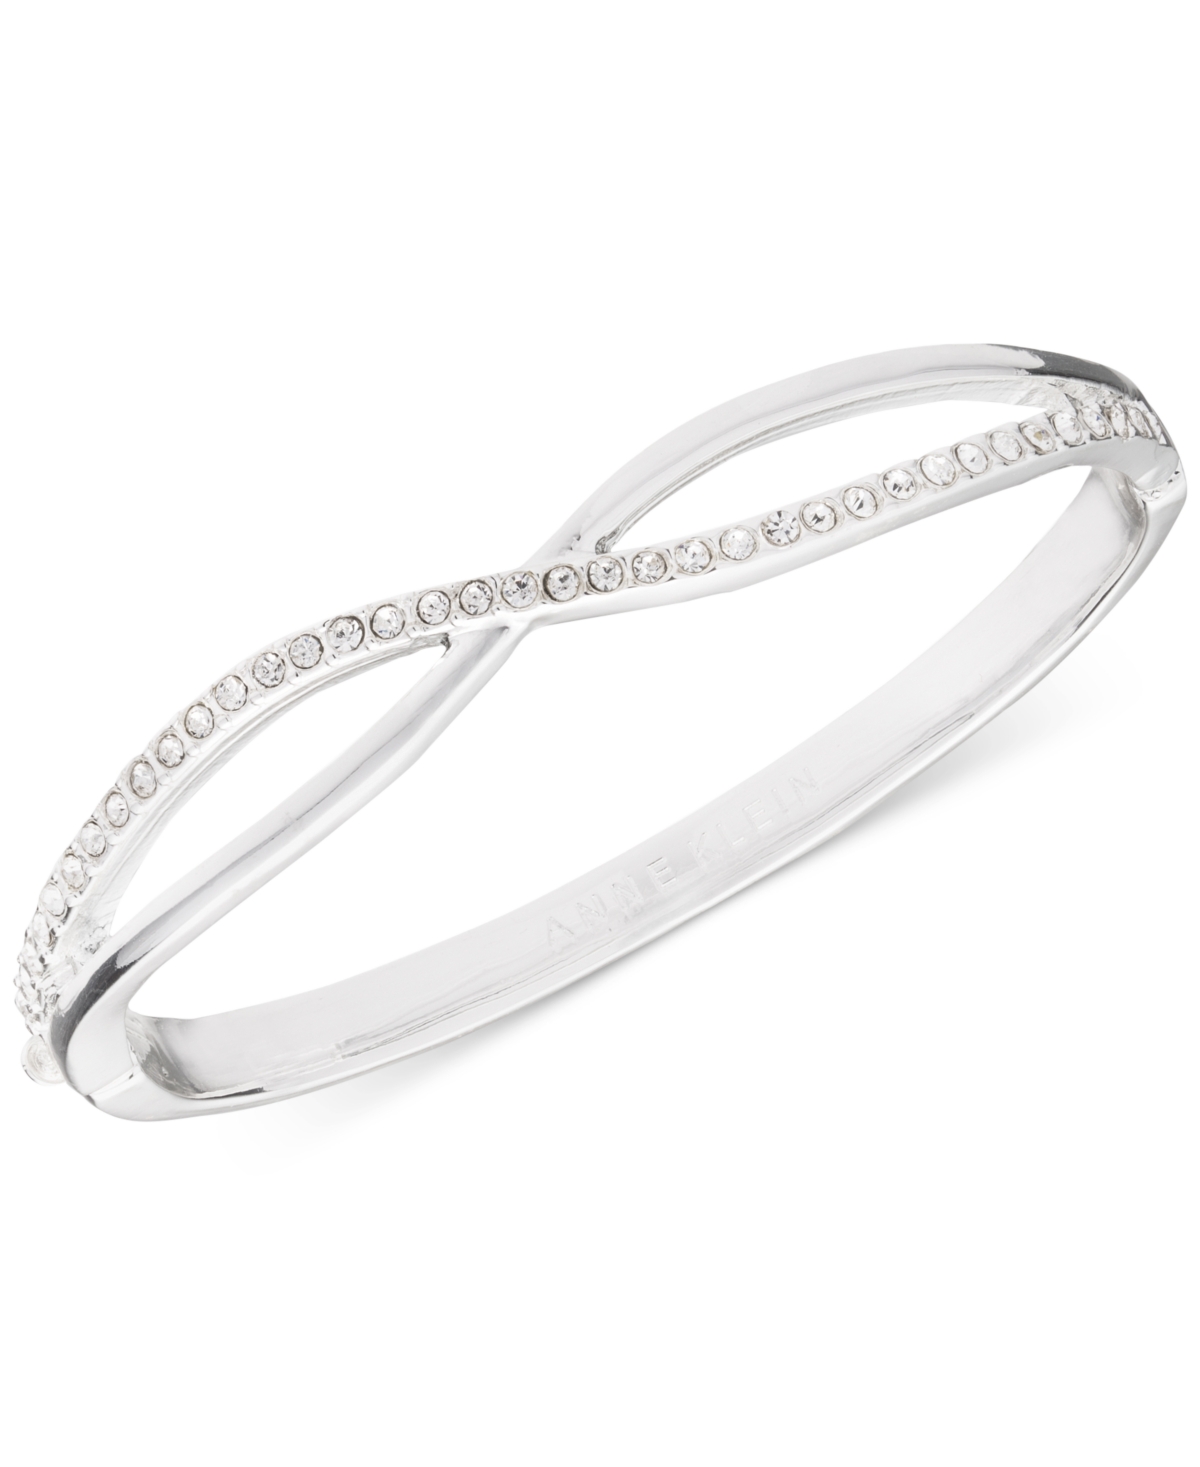 Crystal Crisscross Bangle Bracelet, Created for Macy's - Gold